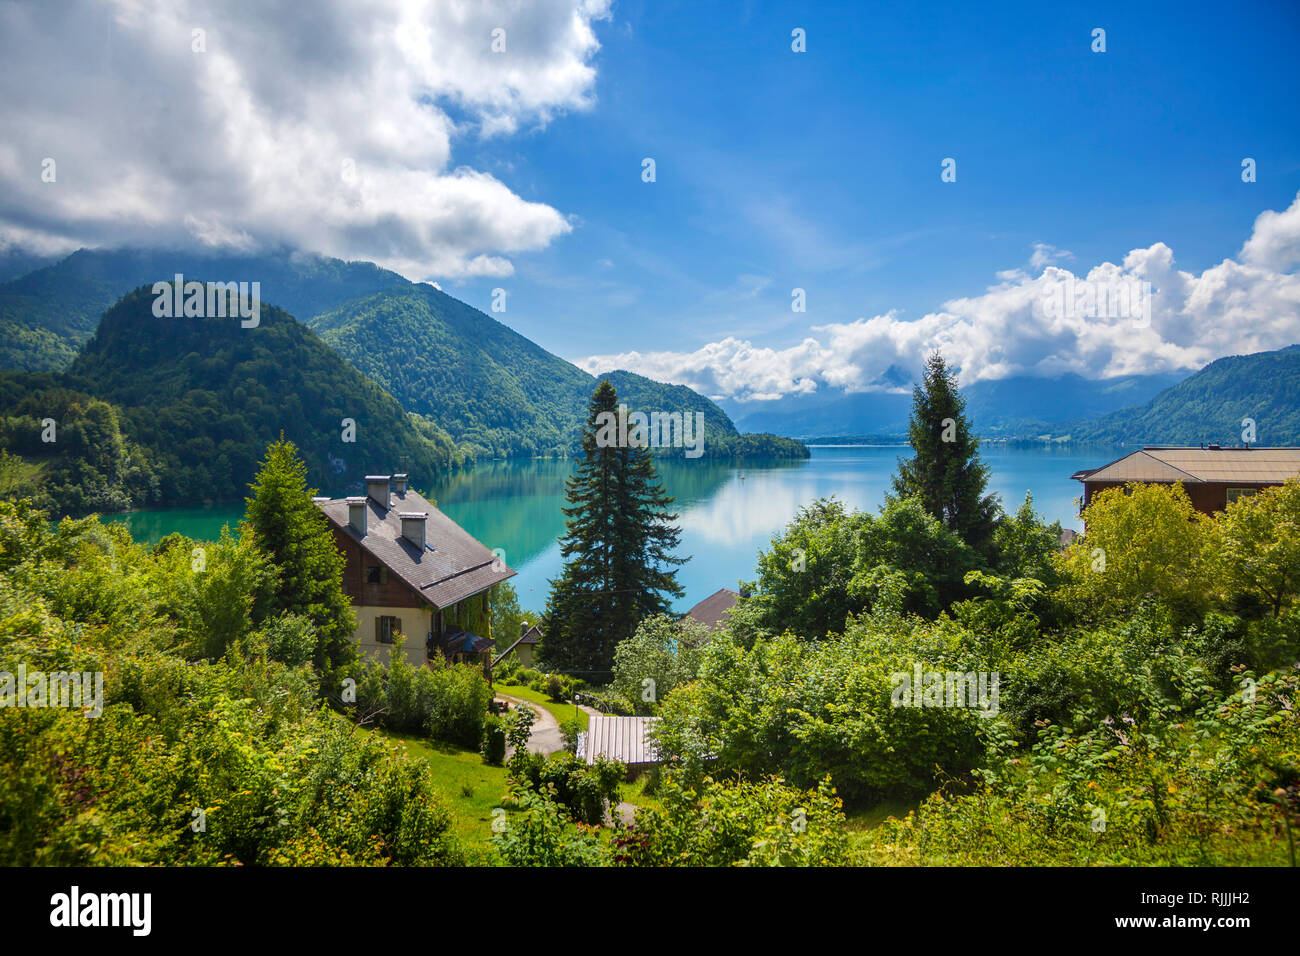 Lake wofgang in Austria Stock Photo